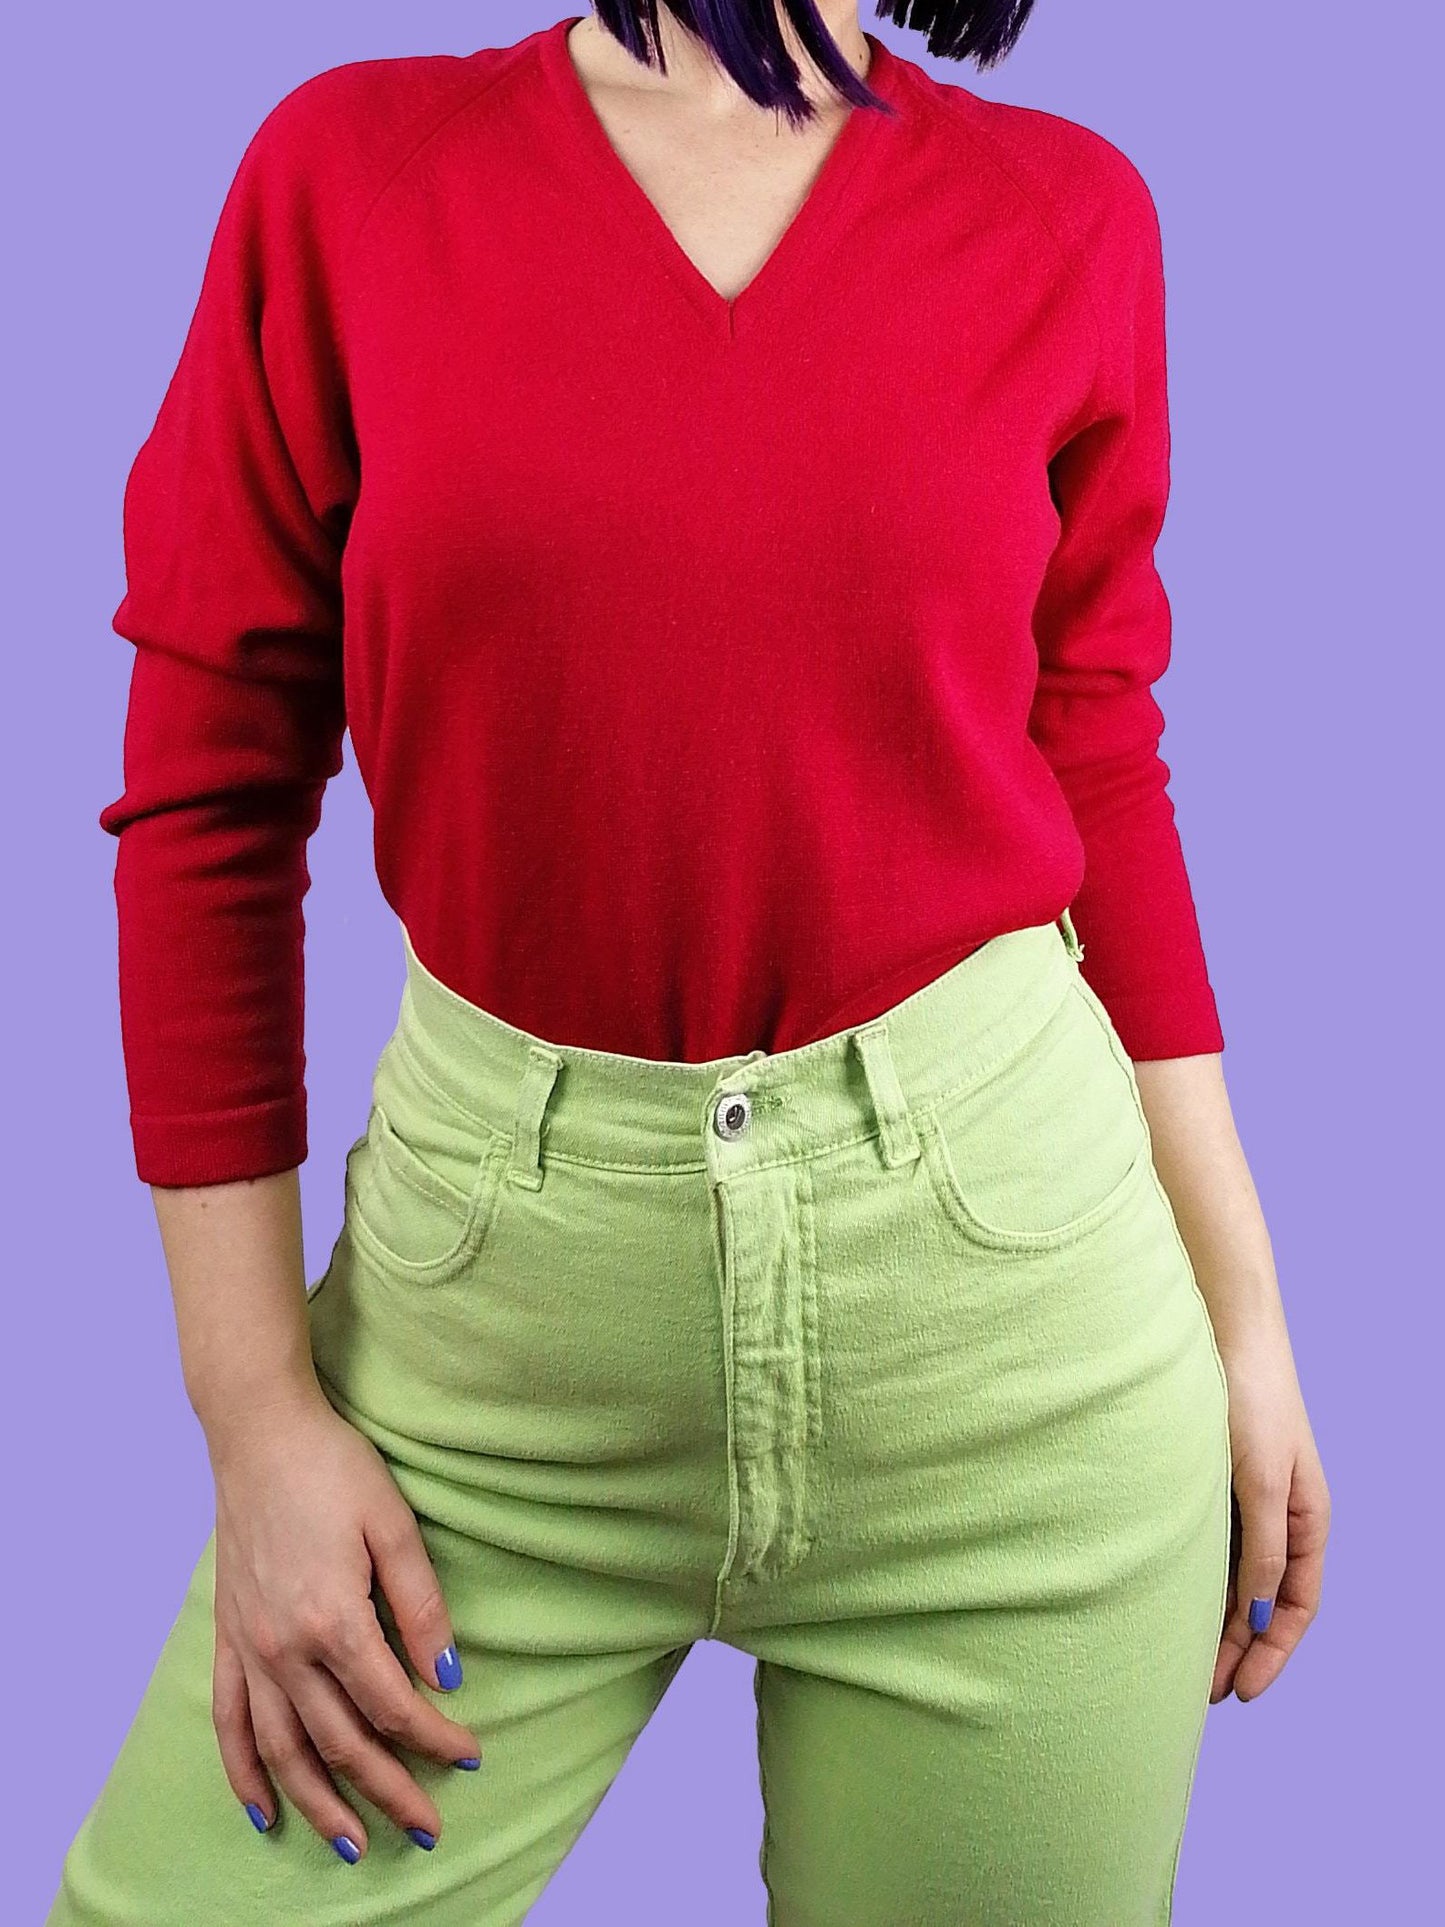 Virgin Wool Pink Sweater - size S-M